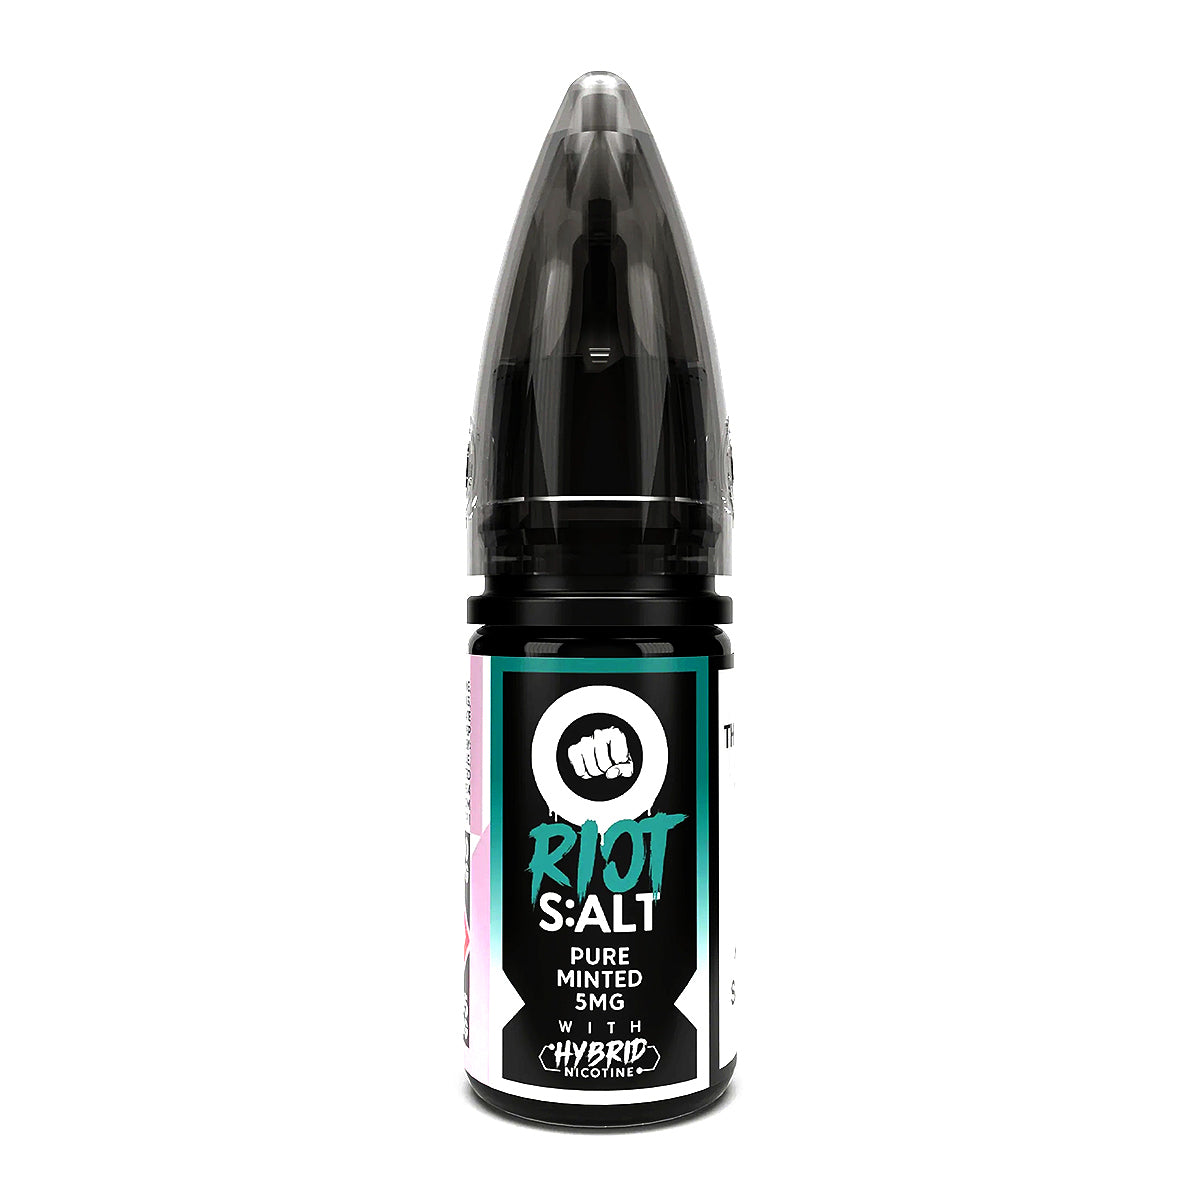 Pure Minted 10ml Hybrid Nicotine Salt by Riot Salt